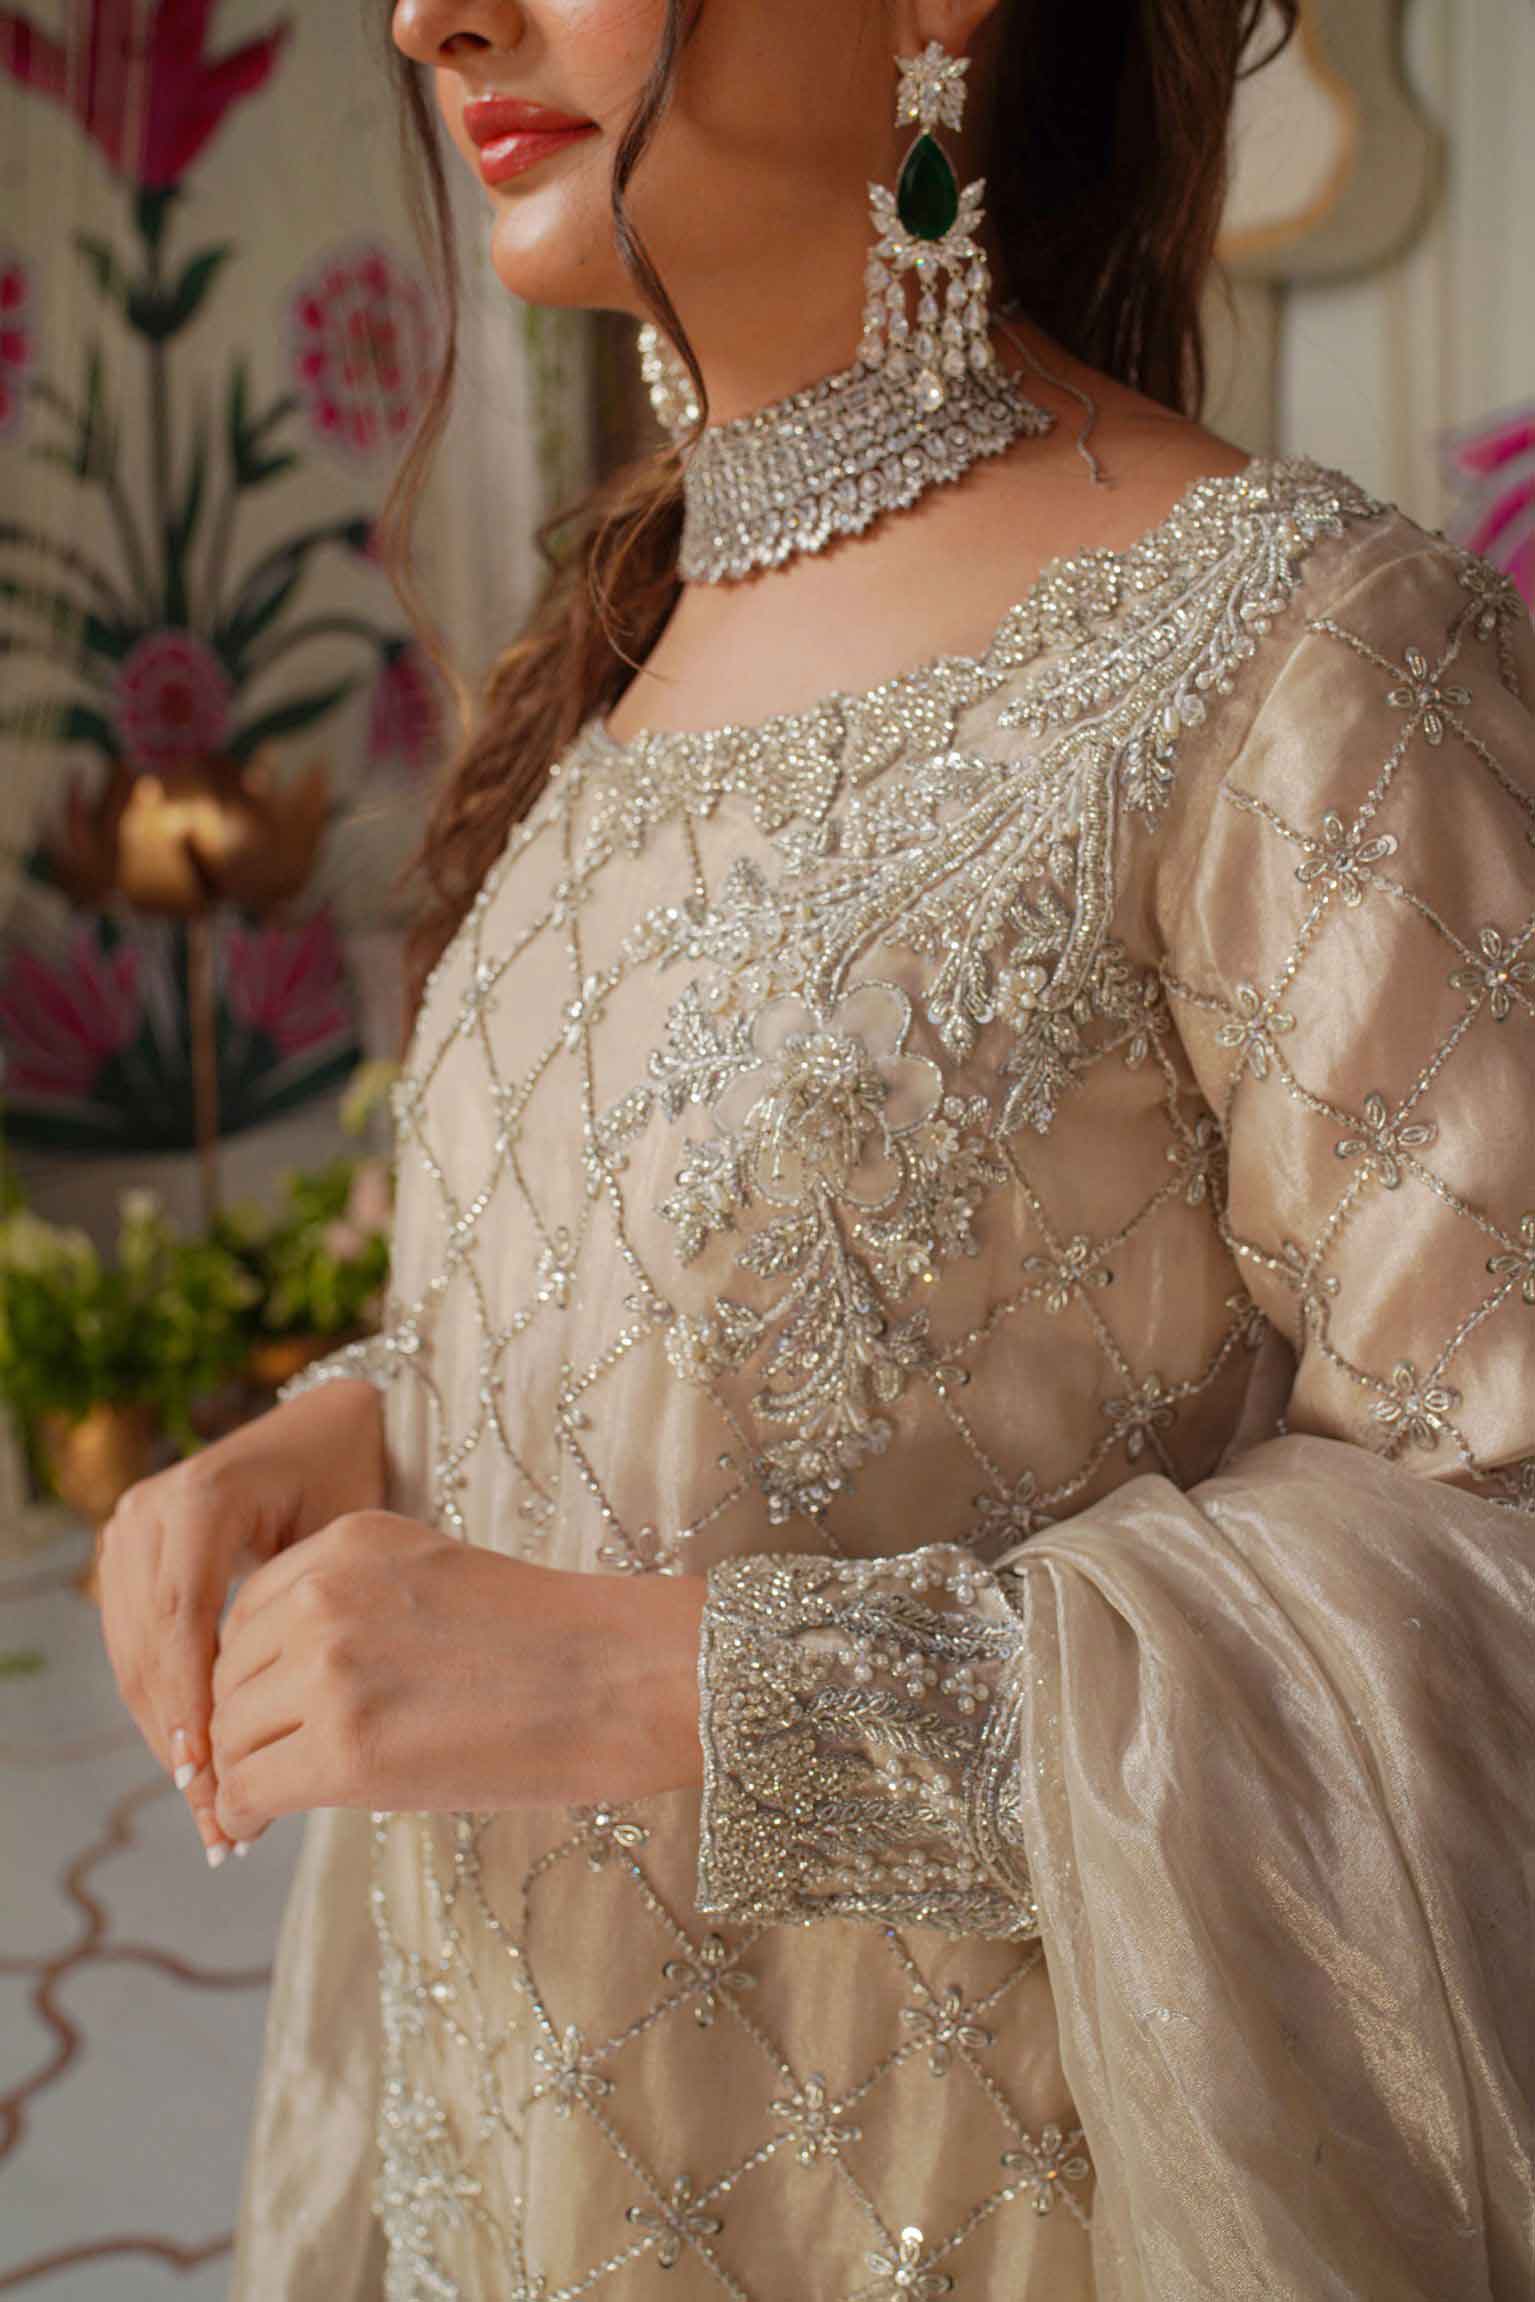 10 Trendy Indian Wedding Dresses For Boy Kids – Mumkins